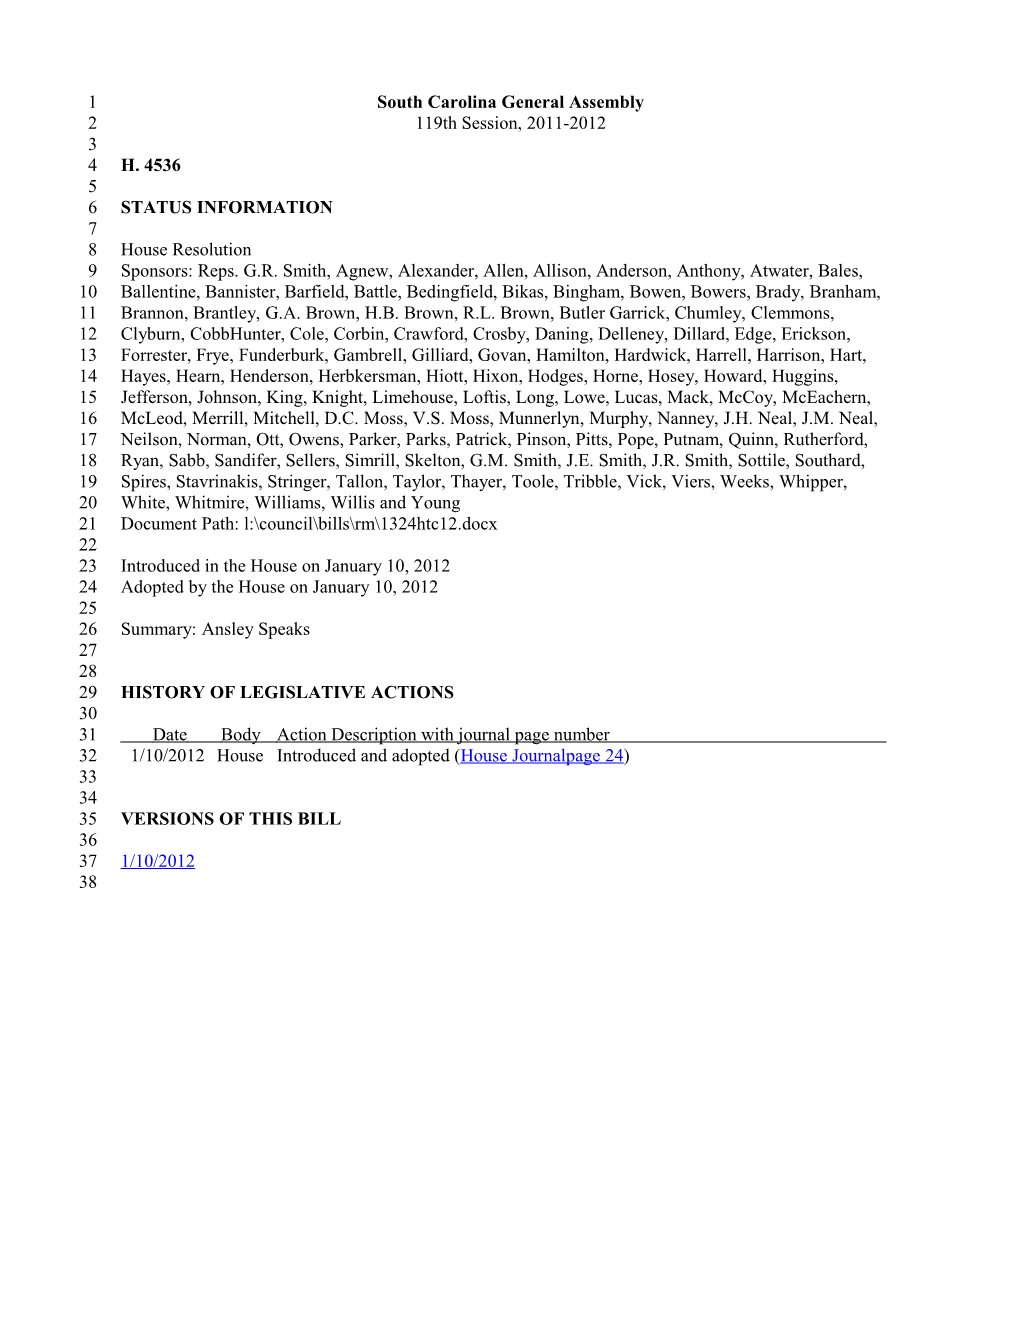 2011-2012 Bill 4536: Ansley Speaks - South Carolina Legislature Online